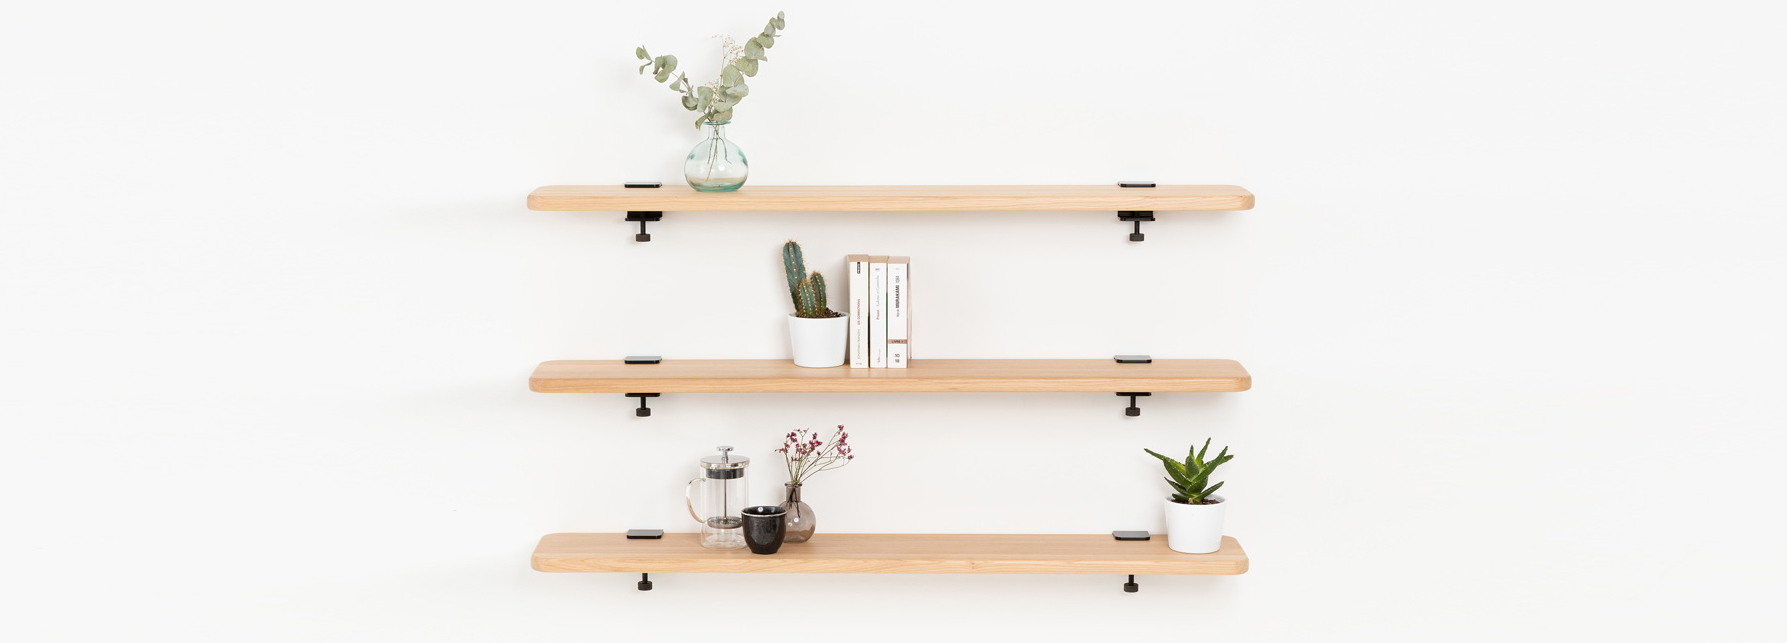 Wall-mounted bookshelves - TIPTOE